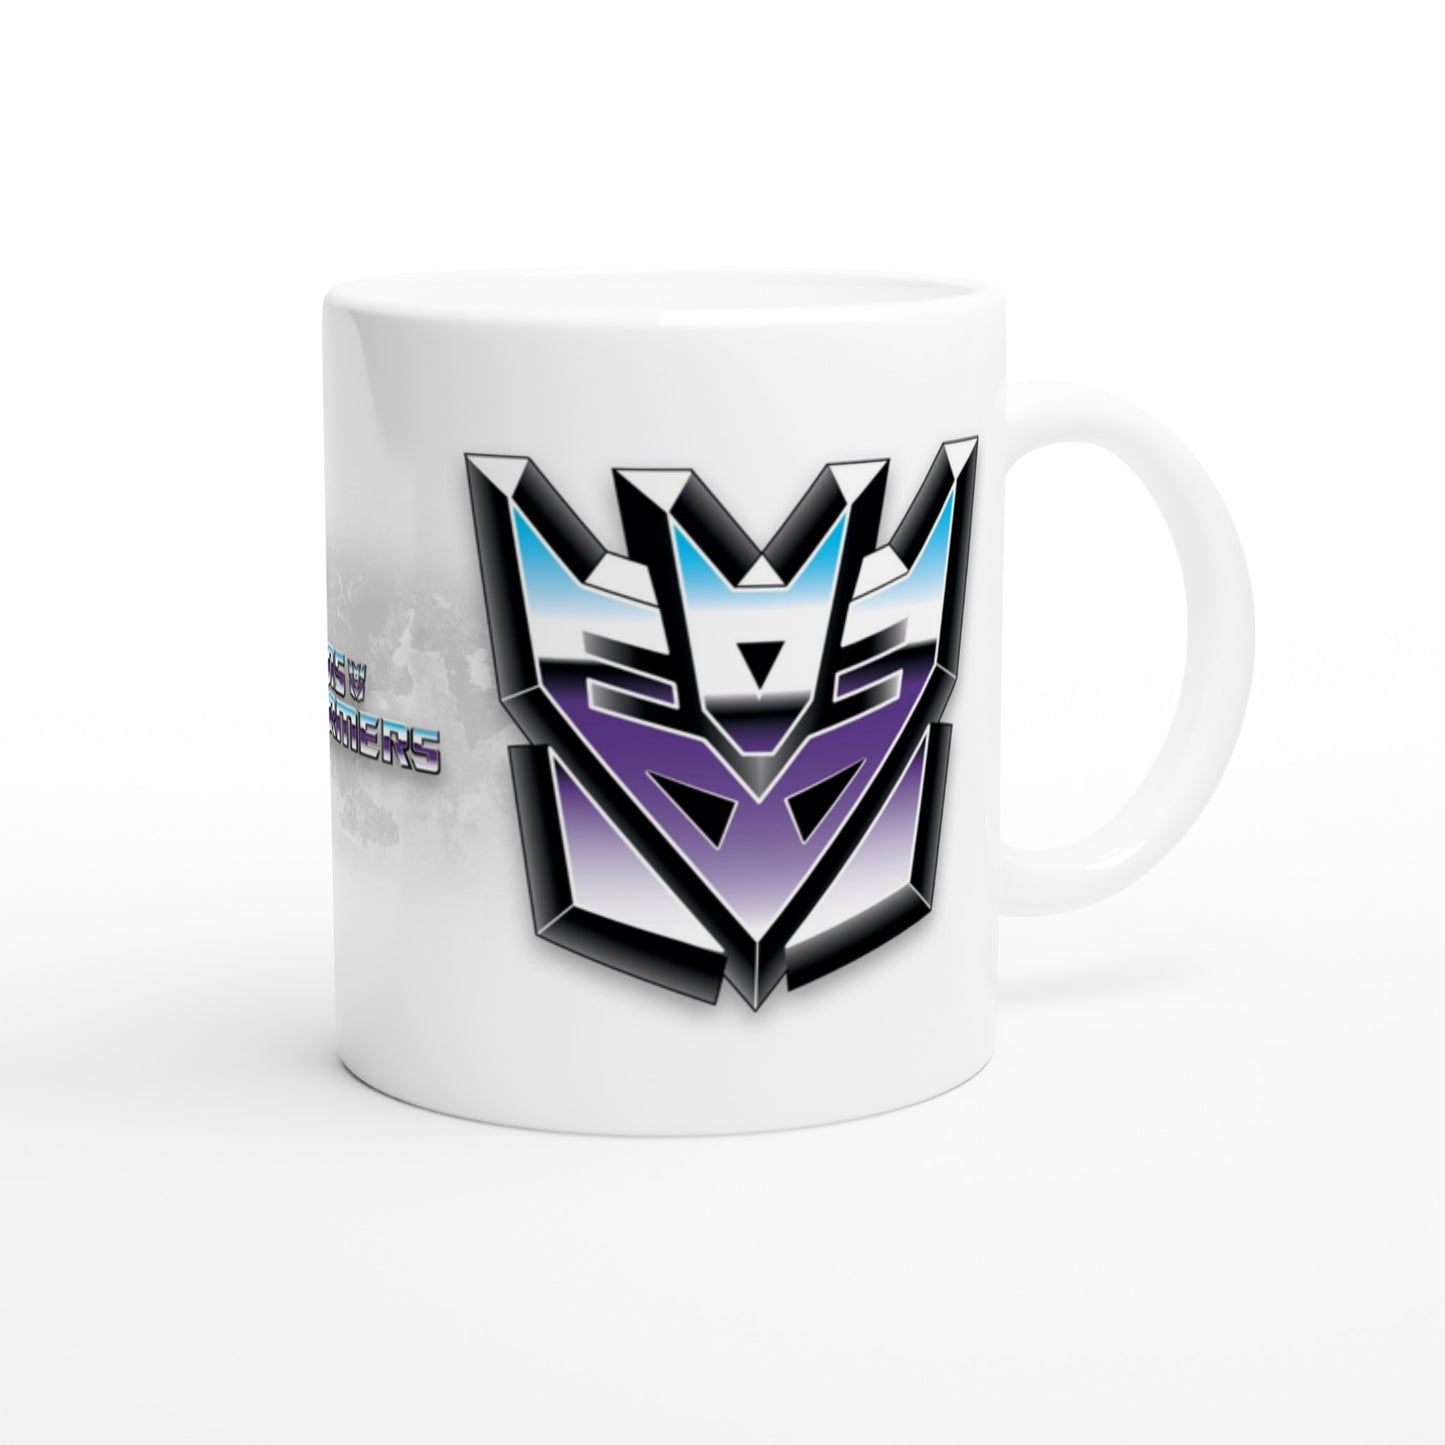 Official Transformers Mug - Decepticon - 330ml White Mug